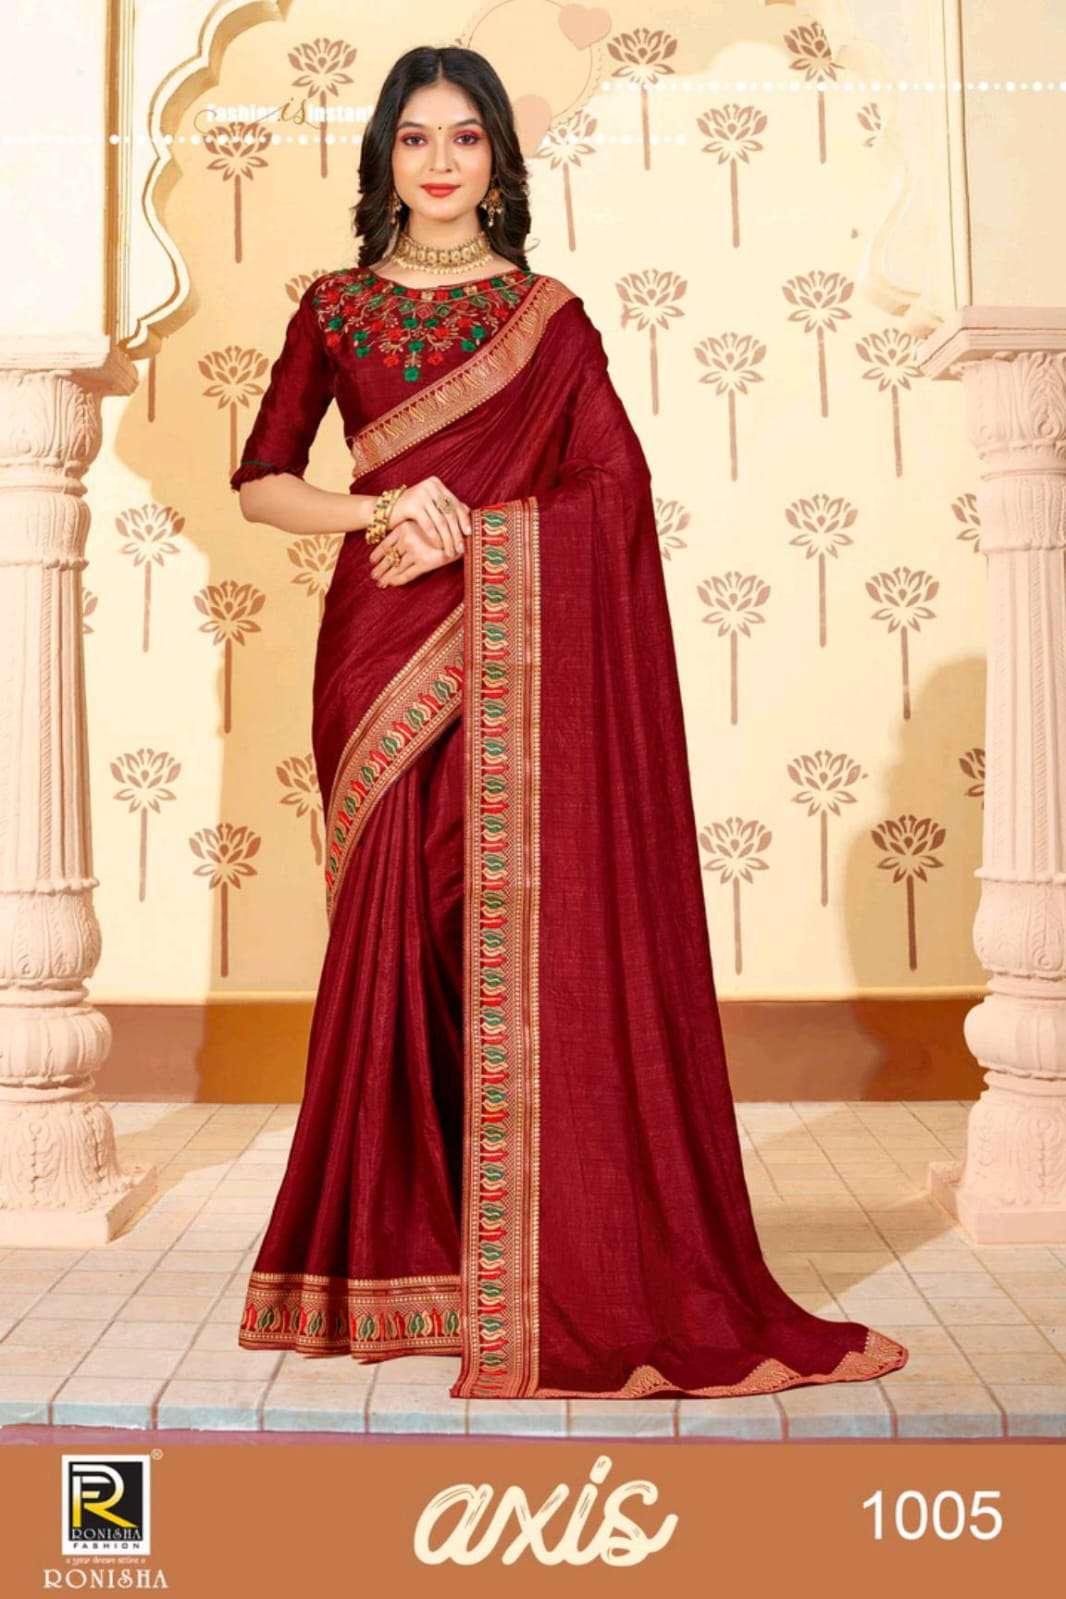 Ronisha Present Axis Kumari Silk Fancy Border Work Blouse Daily Wear Saree On Wholesale